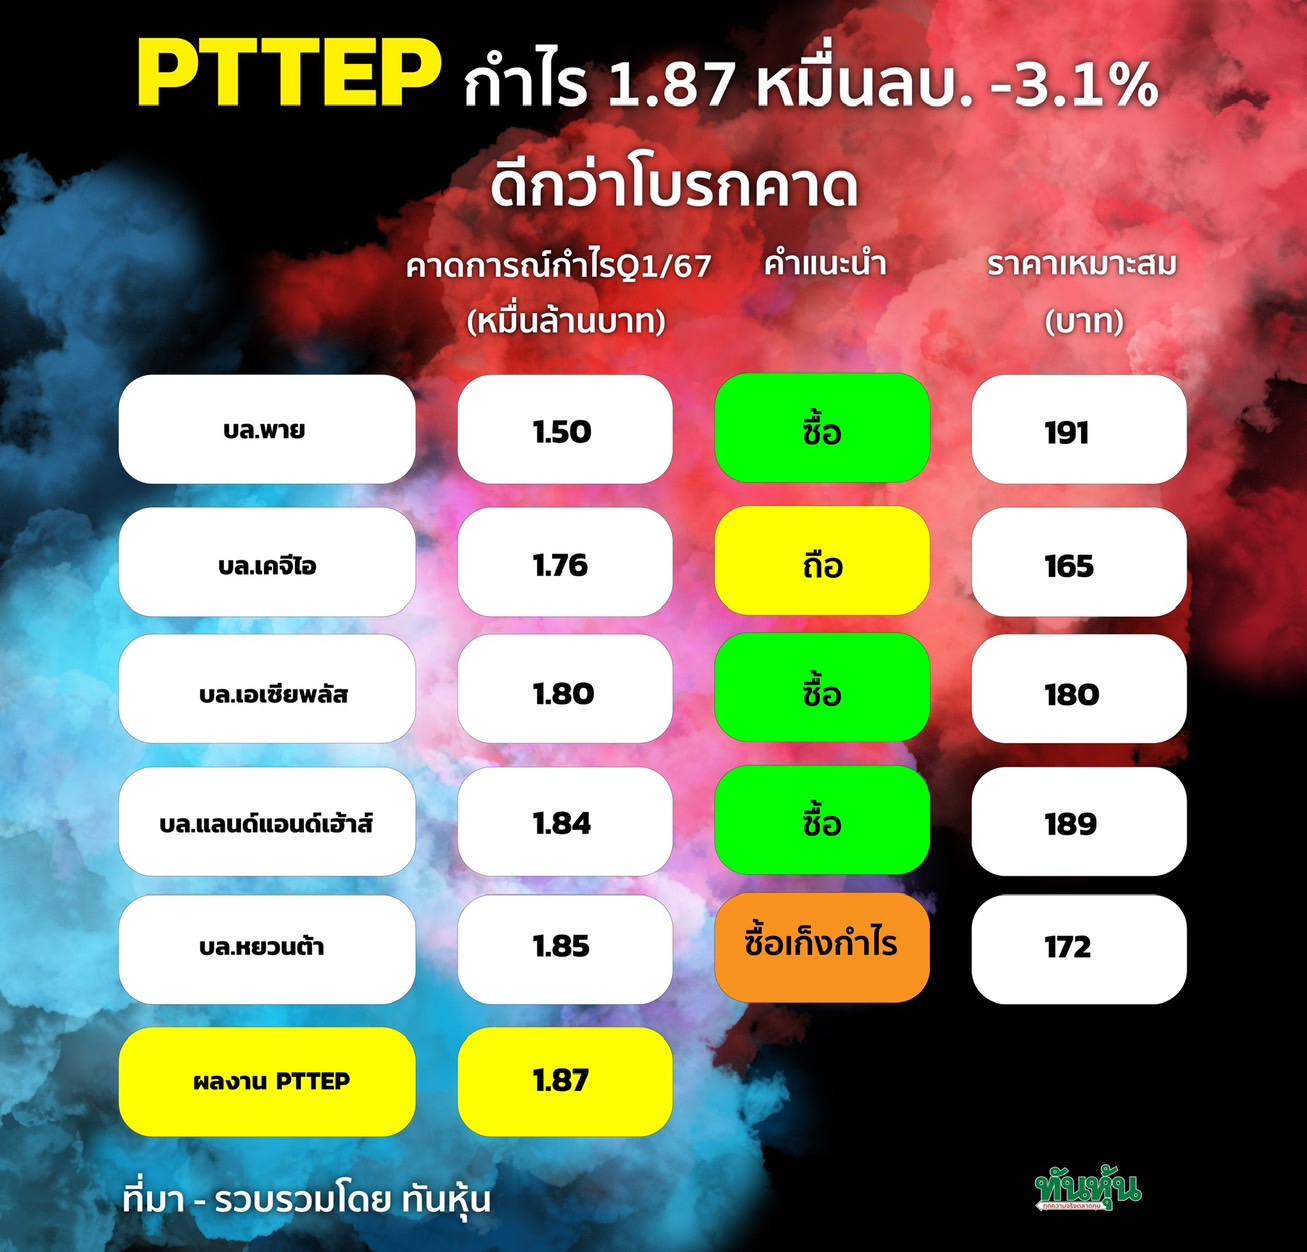 PTTEP กำไร 1.87 หมื่นลบ. -3.1% ดีกว่าโบรกคาด